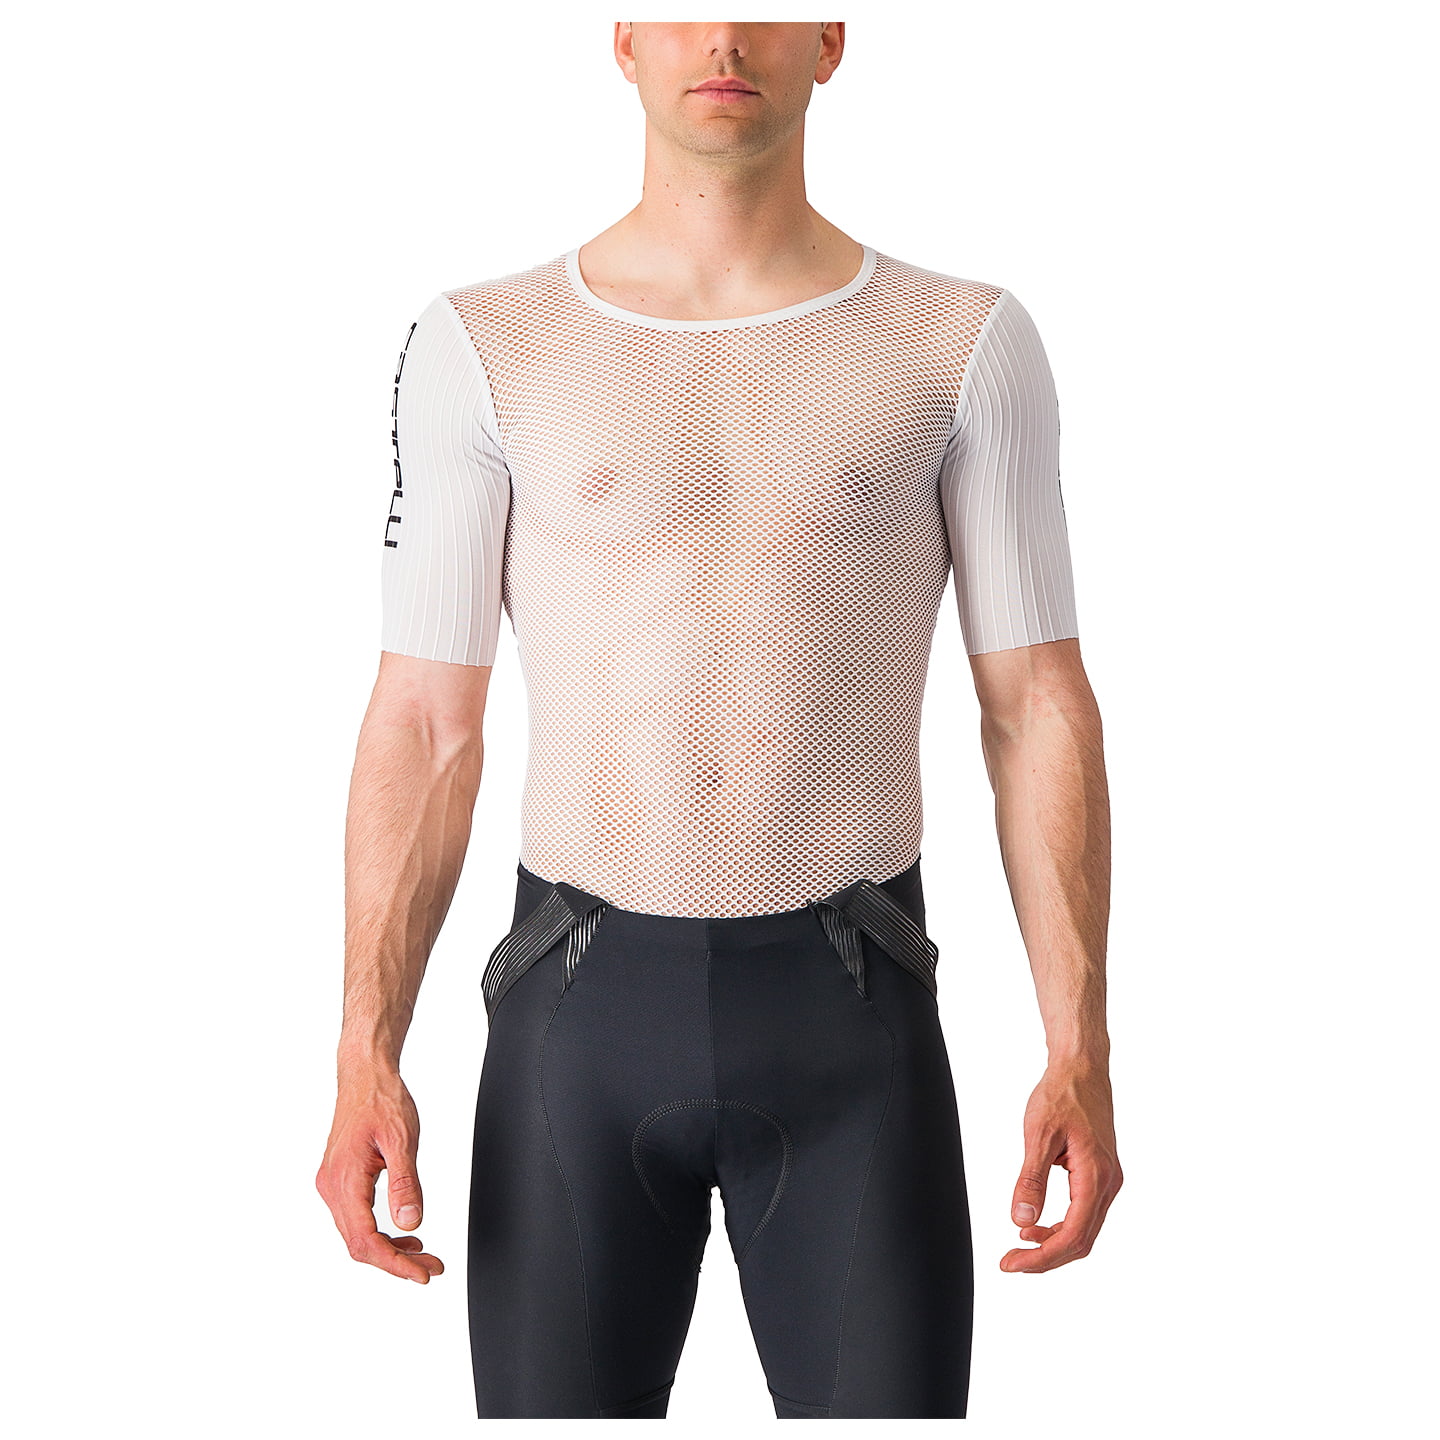 CASTELLI Cycling Bolero Base Layer, for men, size M, Singlet, Cycling clothing